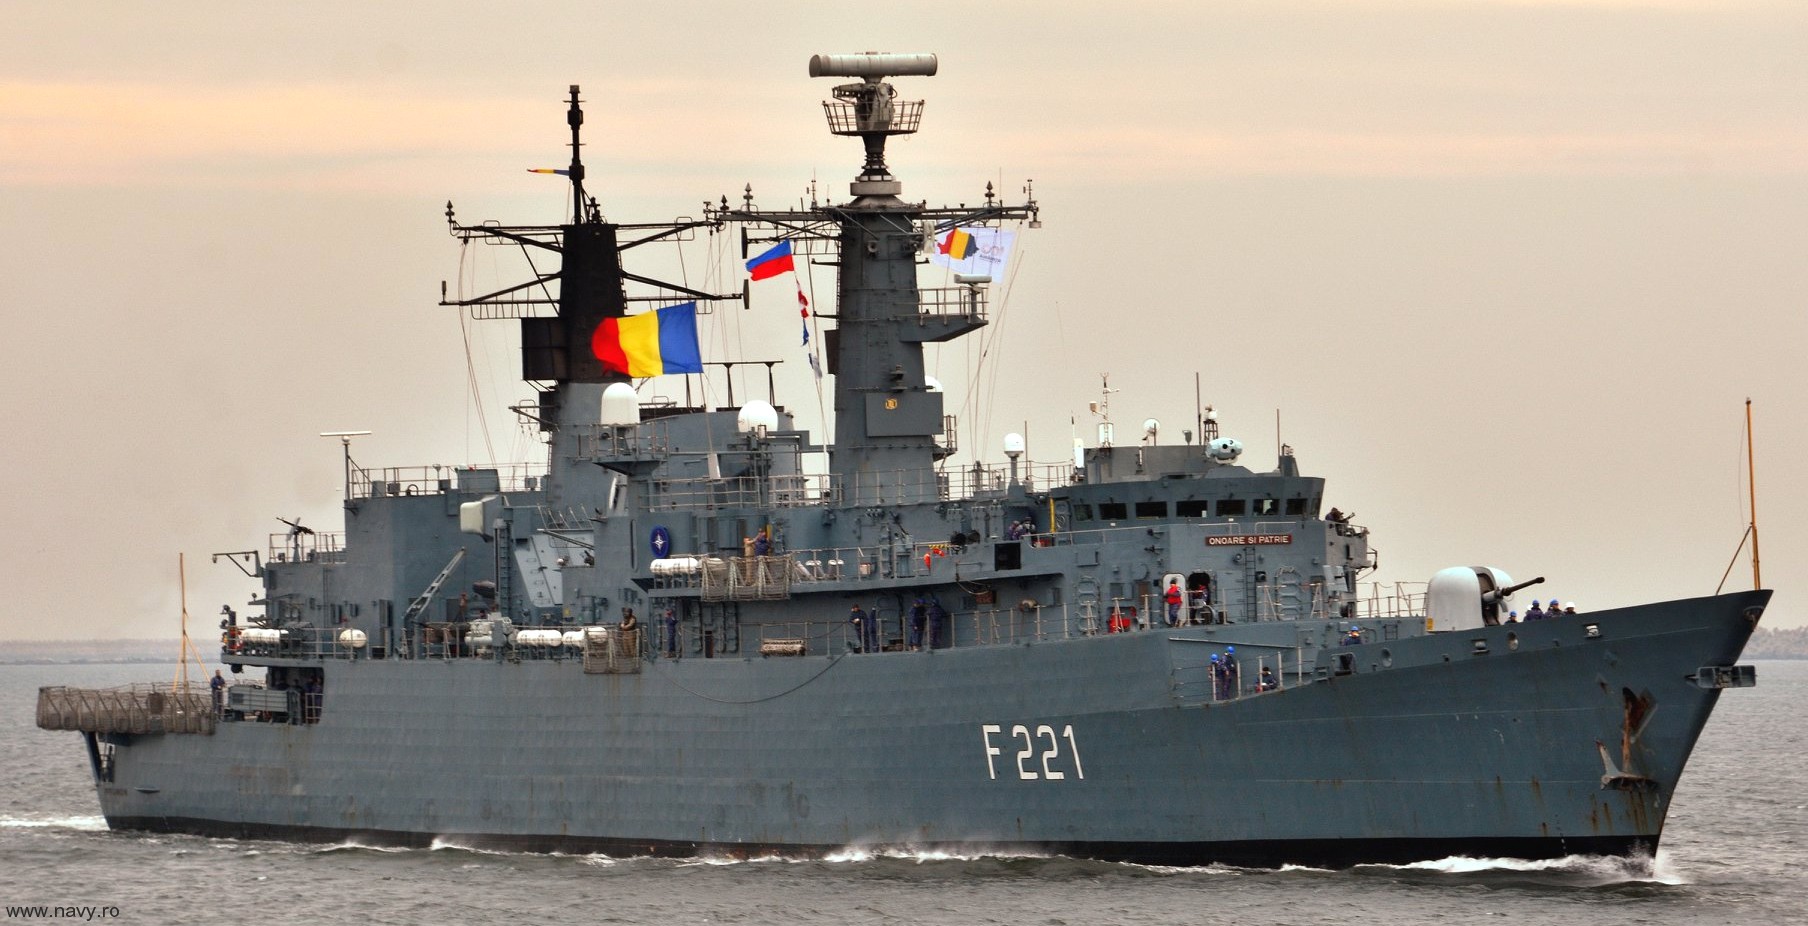 f-221 ros regele ferdinand frigate romanian navy type 22 broadsword class 05 nato snmg